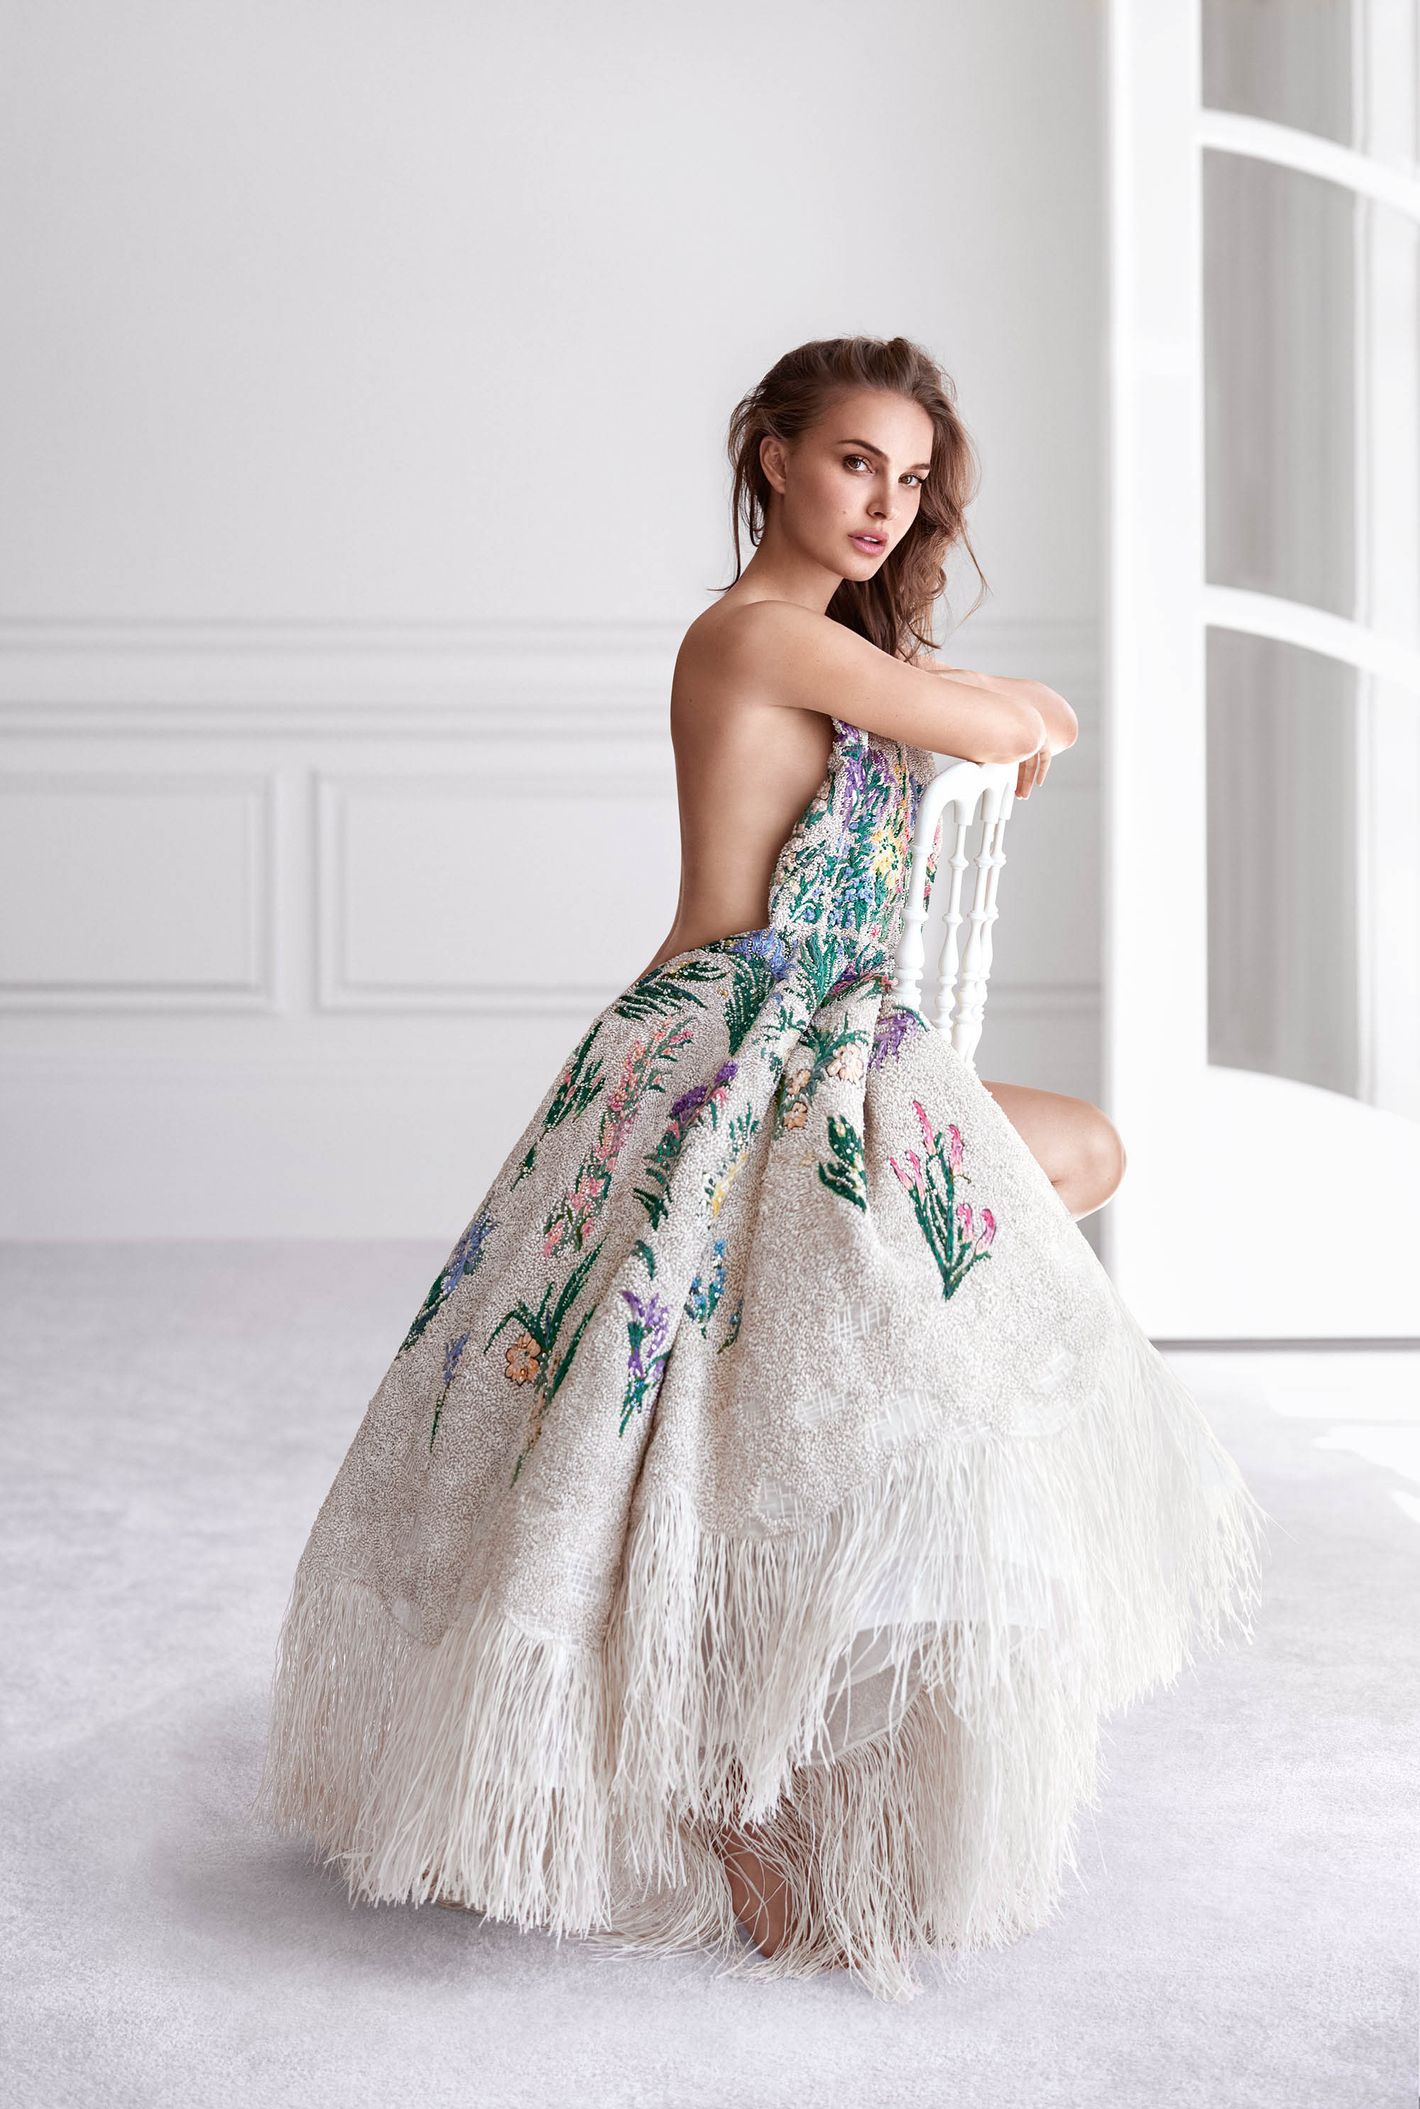 Natalie Portman New Miss Dior Film